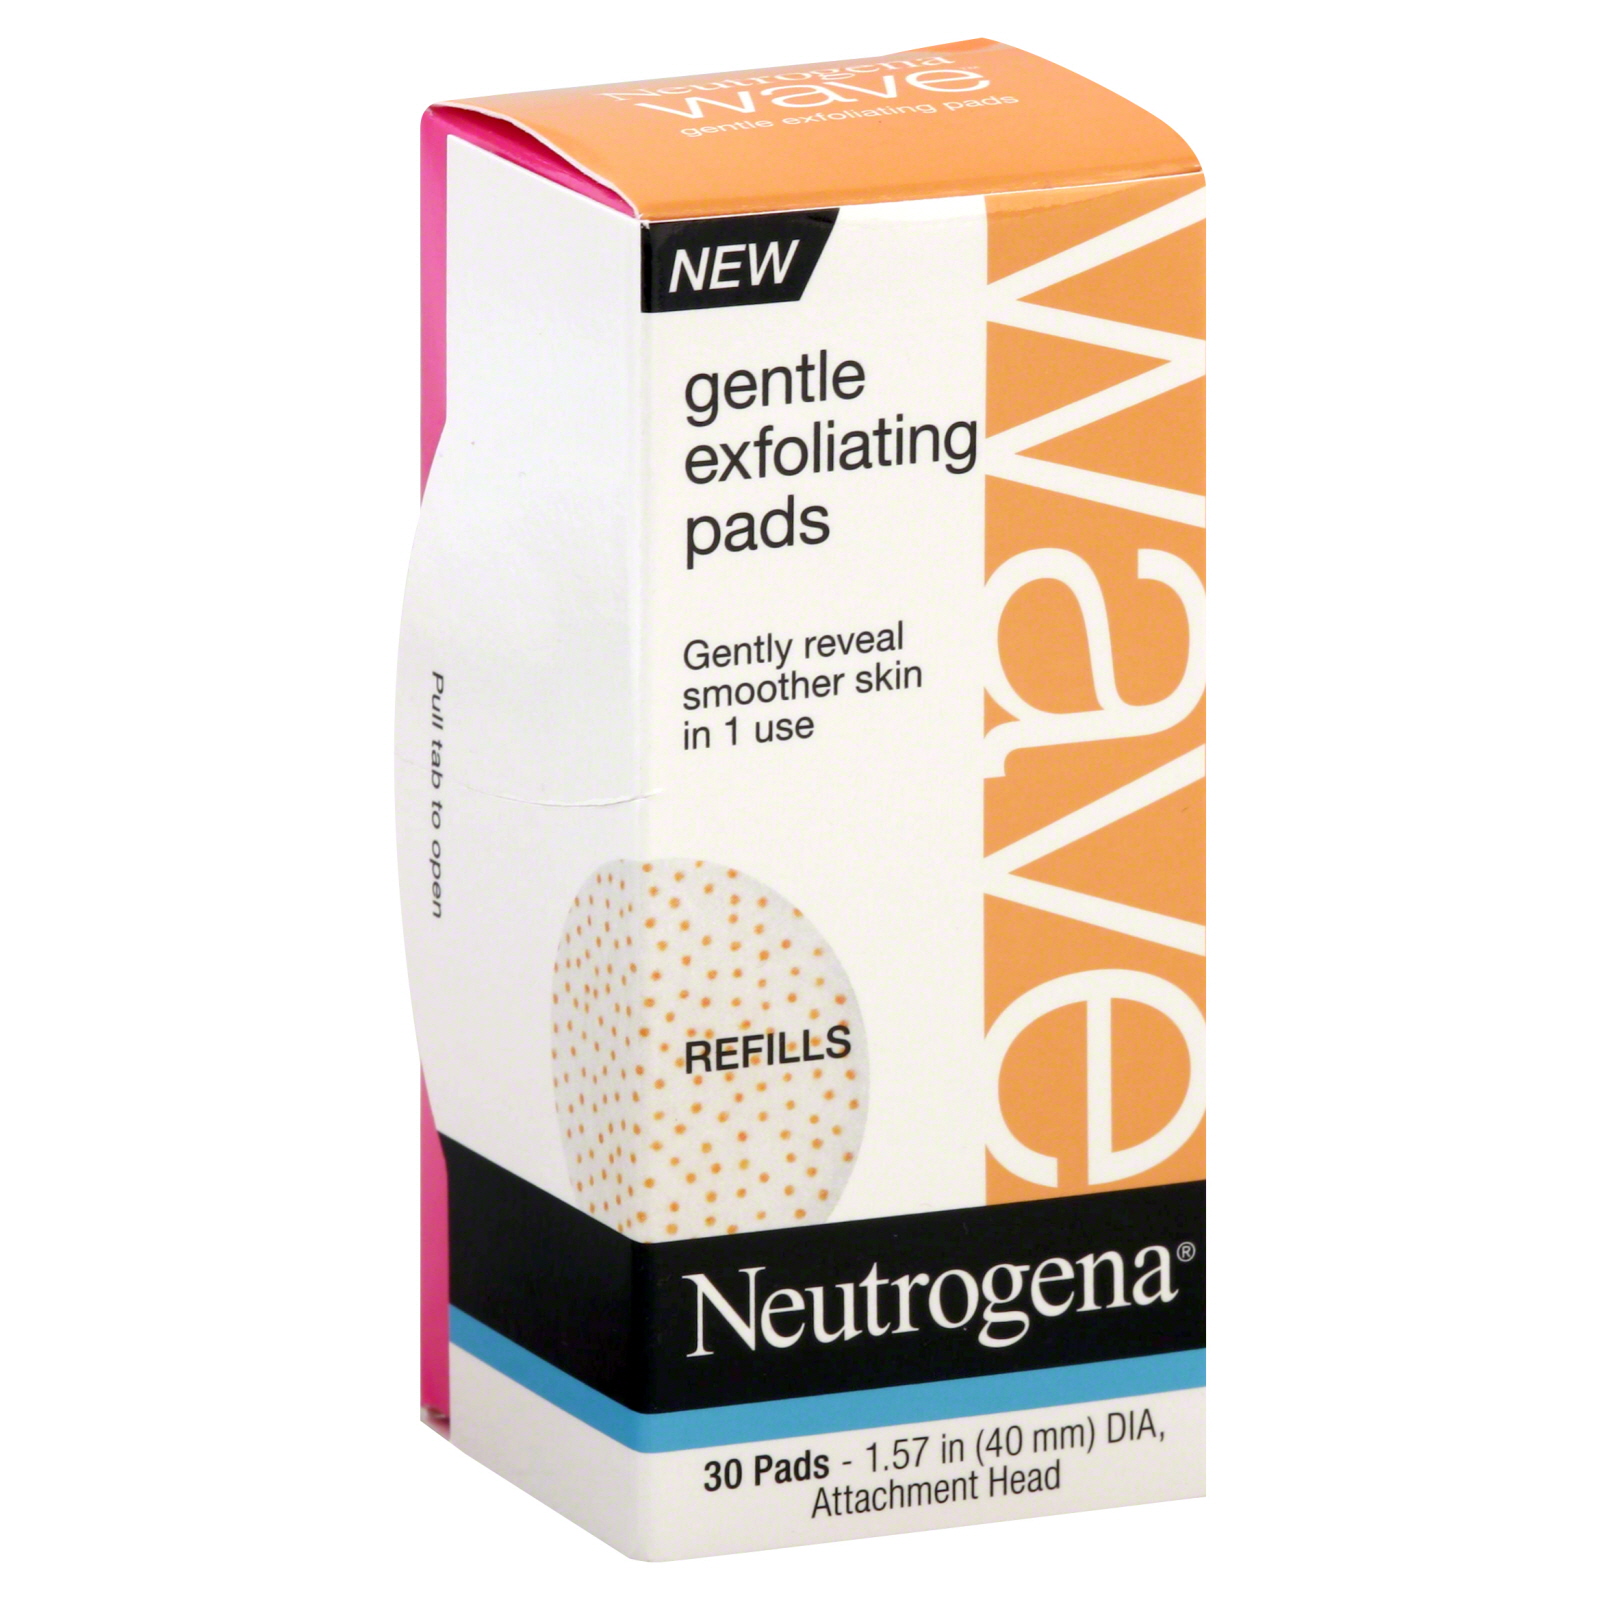 Neutrogena Wave Gentle Exfoliating Pads, Refills, 30 pads